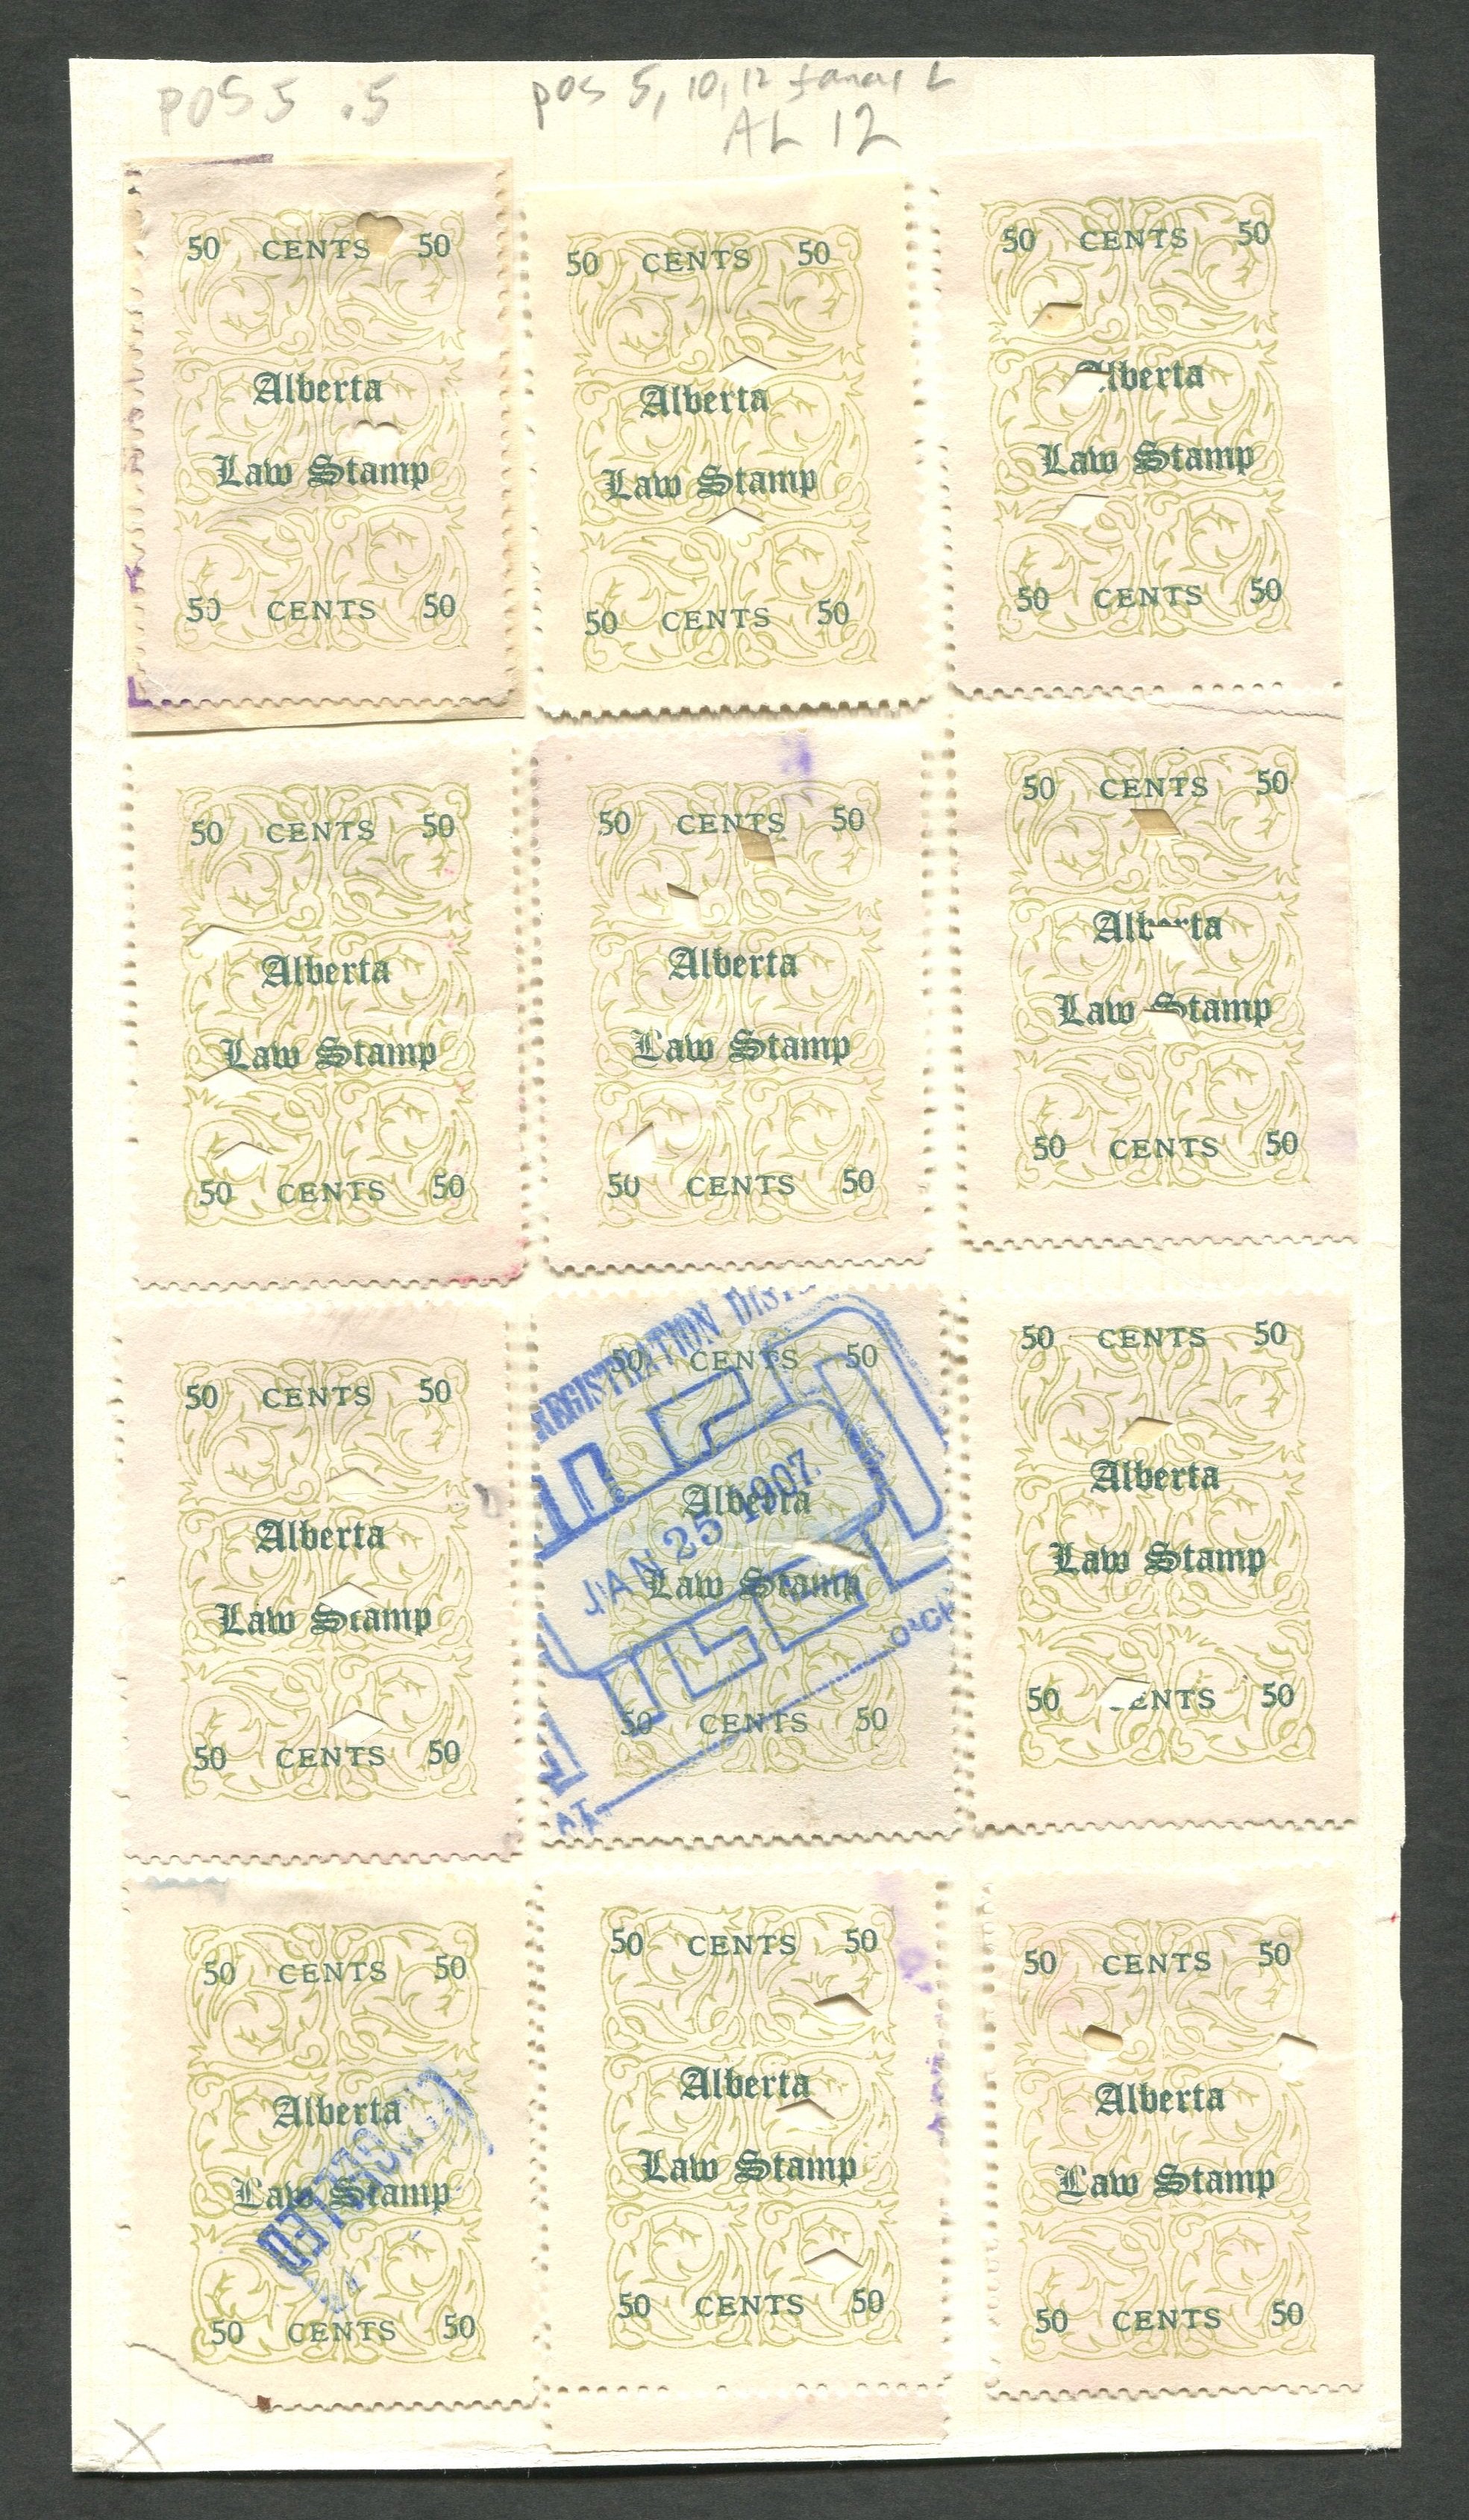 0012AL1709 - AL12 - Used Reconstructed Sheet - Deveney Stamps Ltd. Canadian Stamps